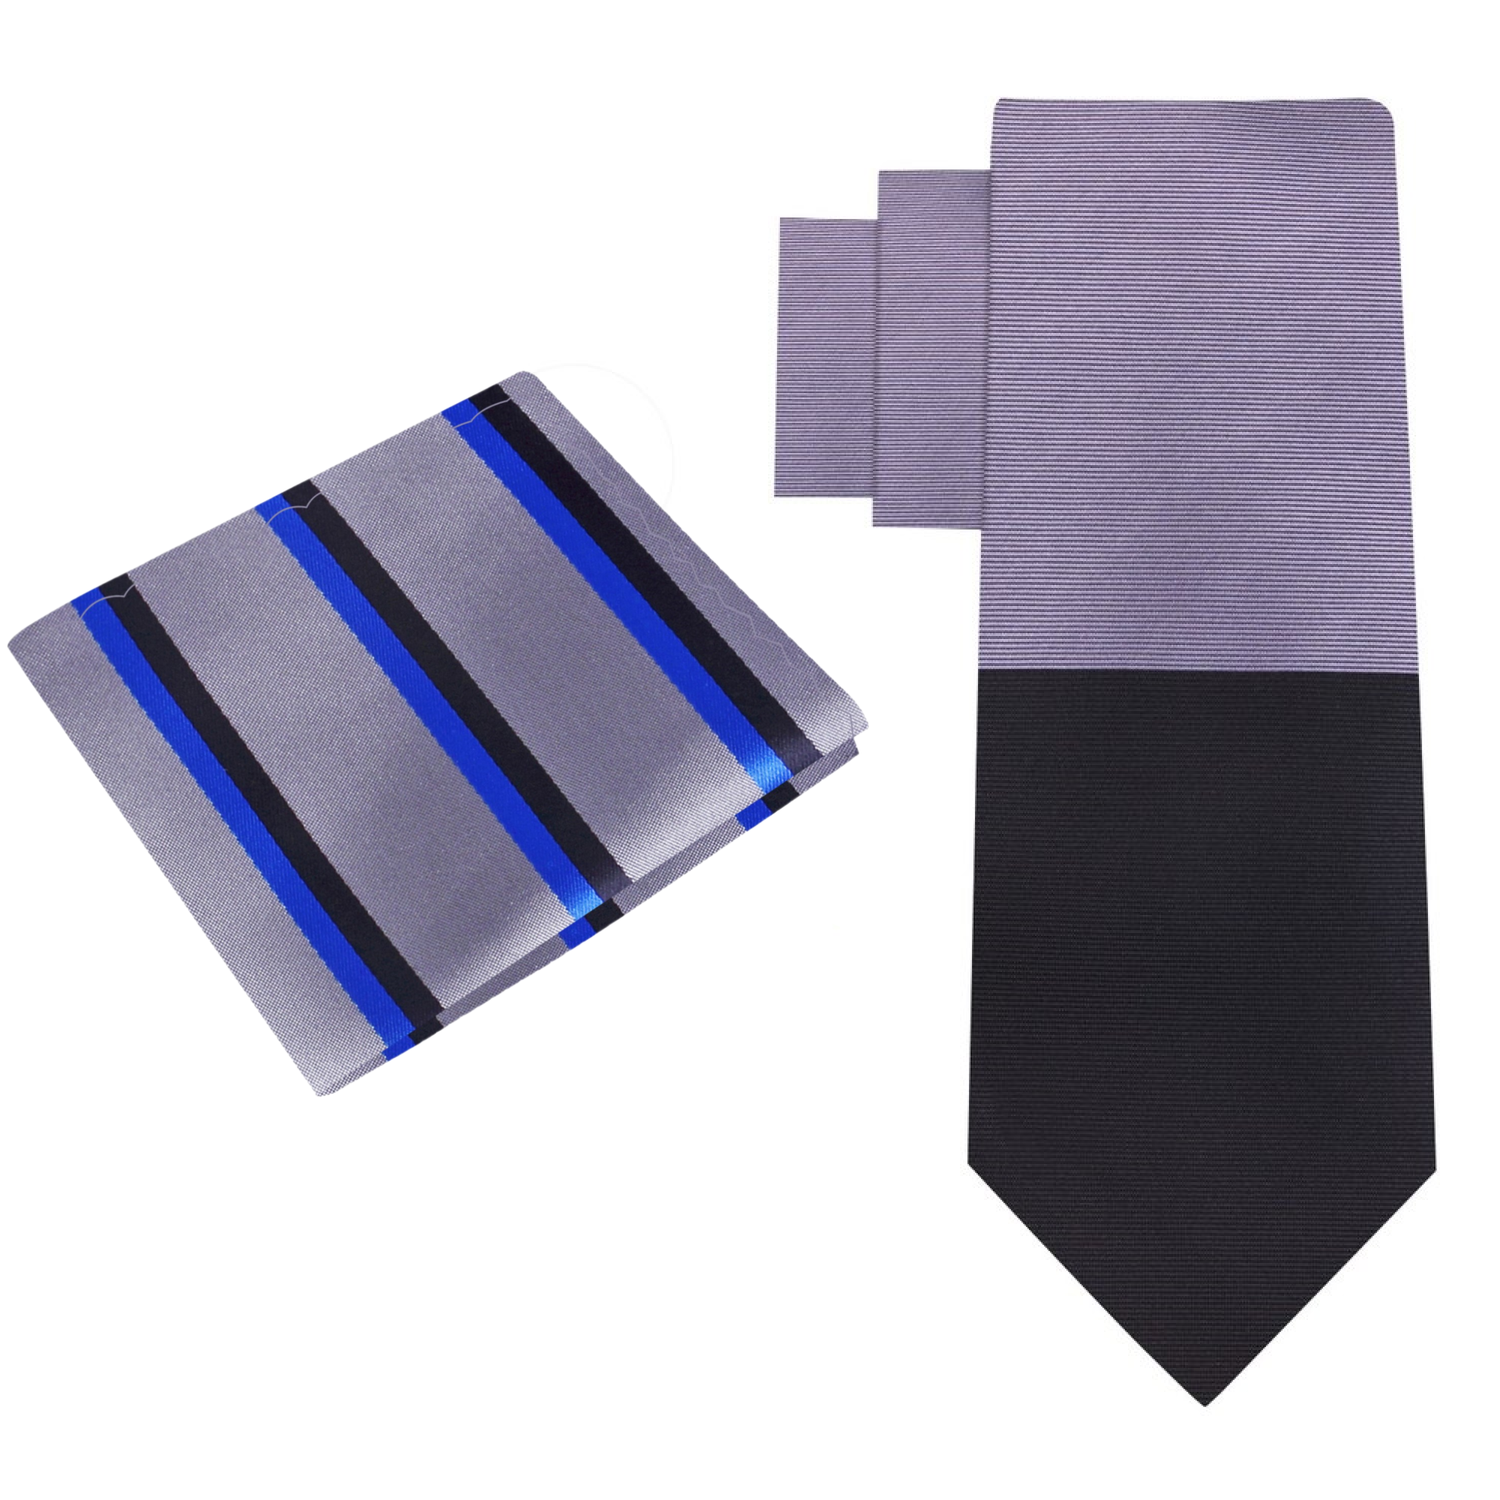 Alt View: Grey, Black, Blue Stripe Tie and Accenting Stripe Square